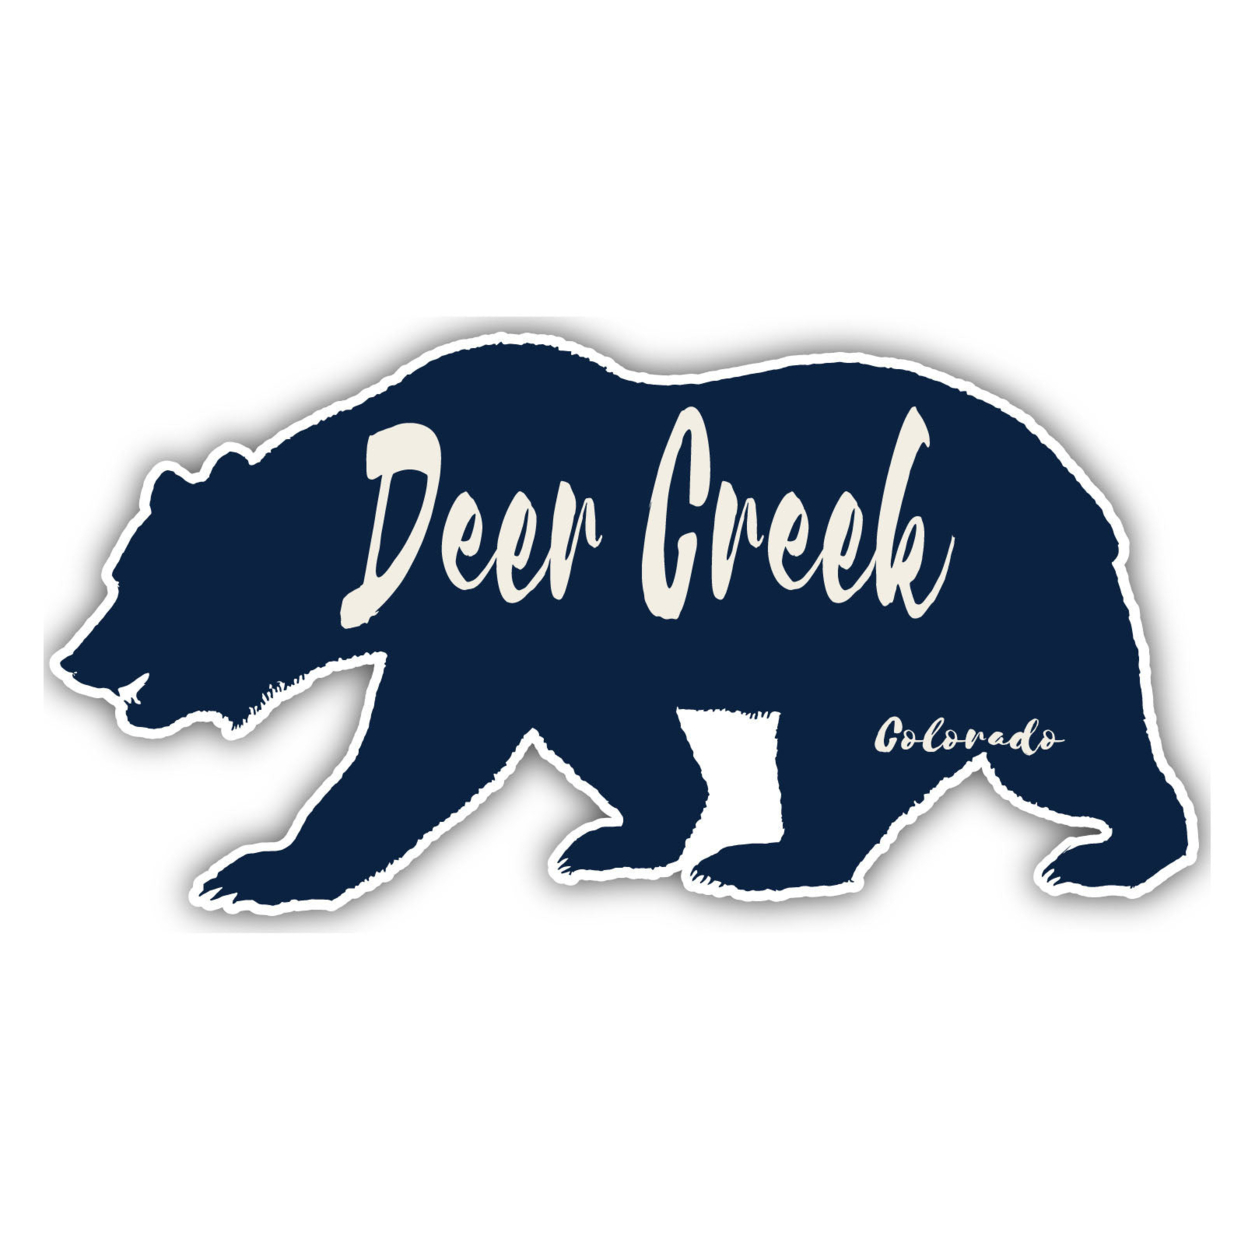 Deer Creek Colorado Souvenir Decorative Stickers (Choose Theme And Size) - Single Unit, 4-Inch, Bear